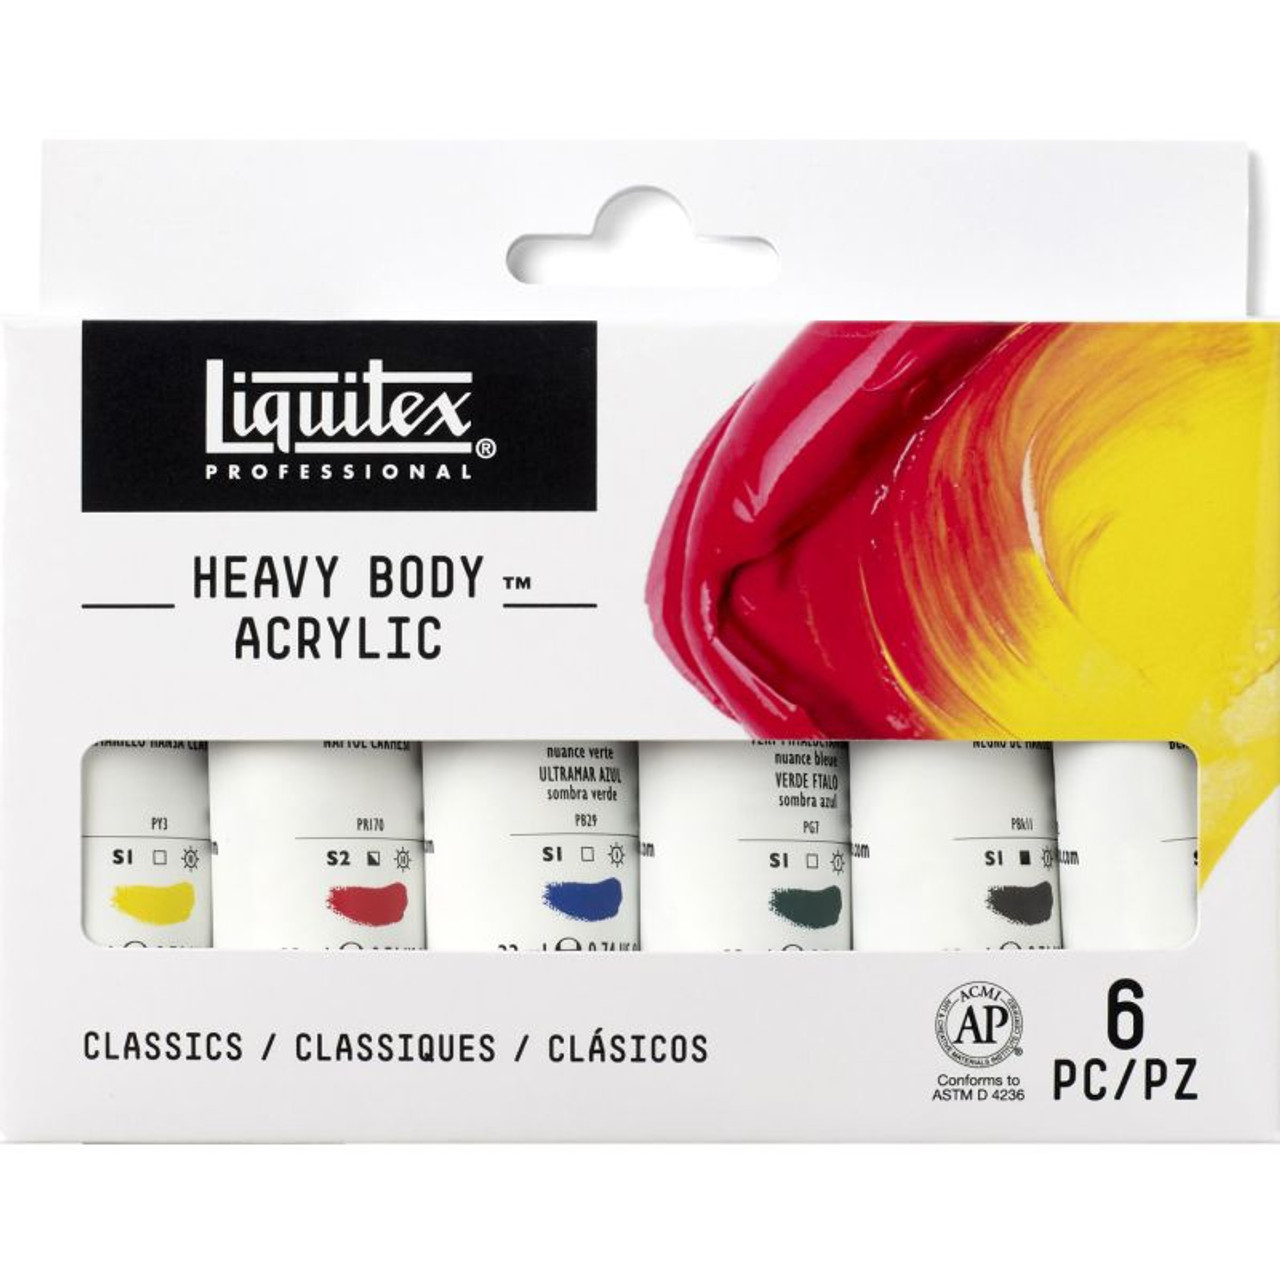 Liquitex Professional Heavy Body Acrylic Color Set 6 Colors